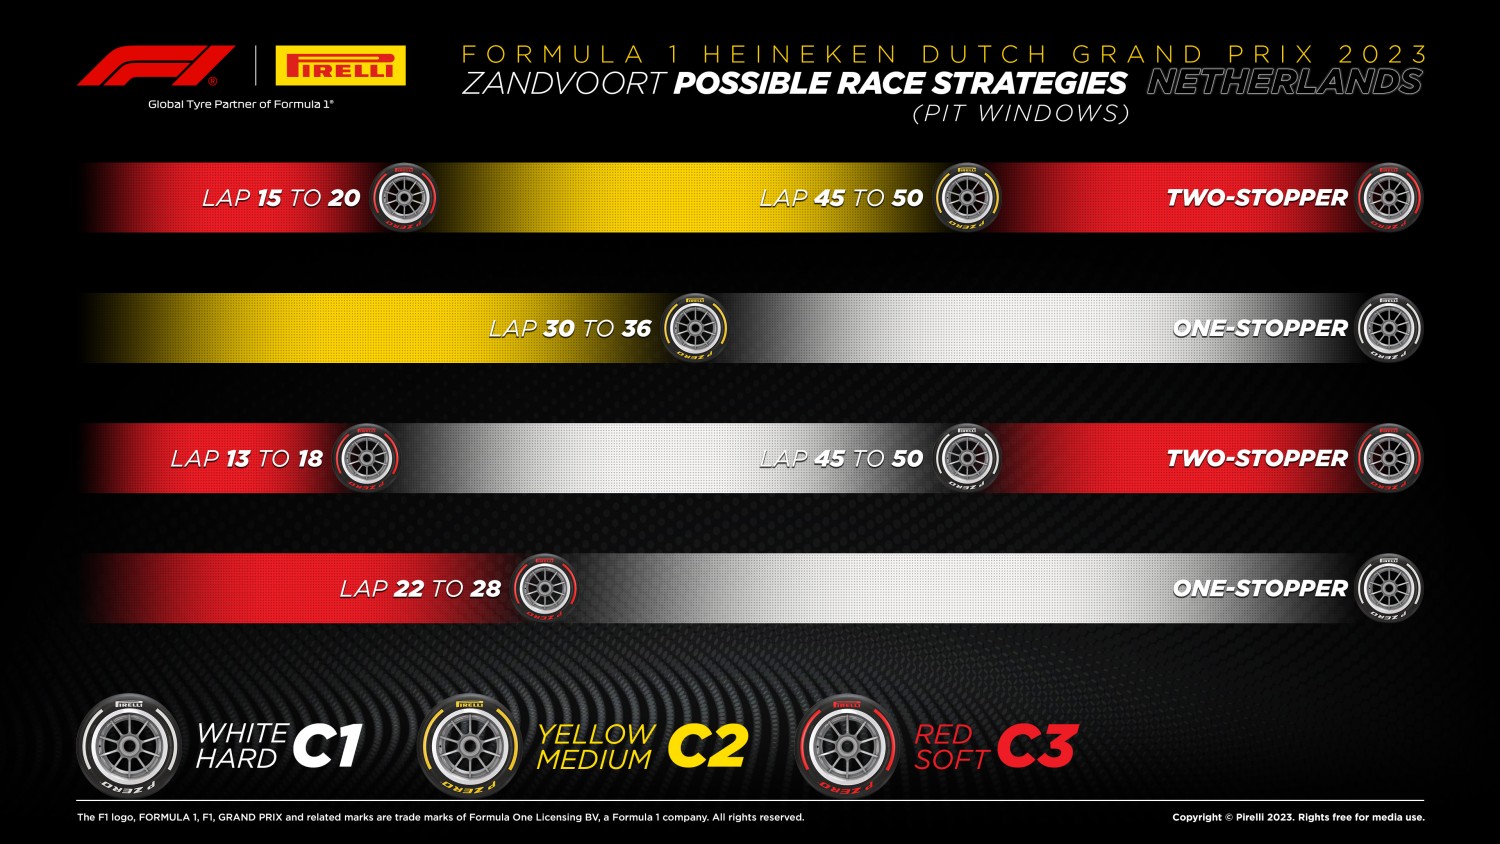 Dutch GP Tire Strategies assuming a dry race